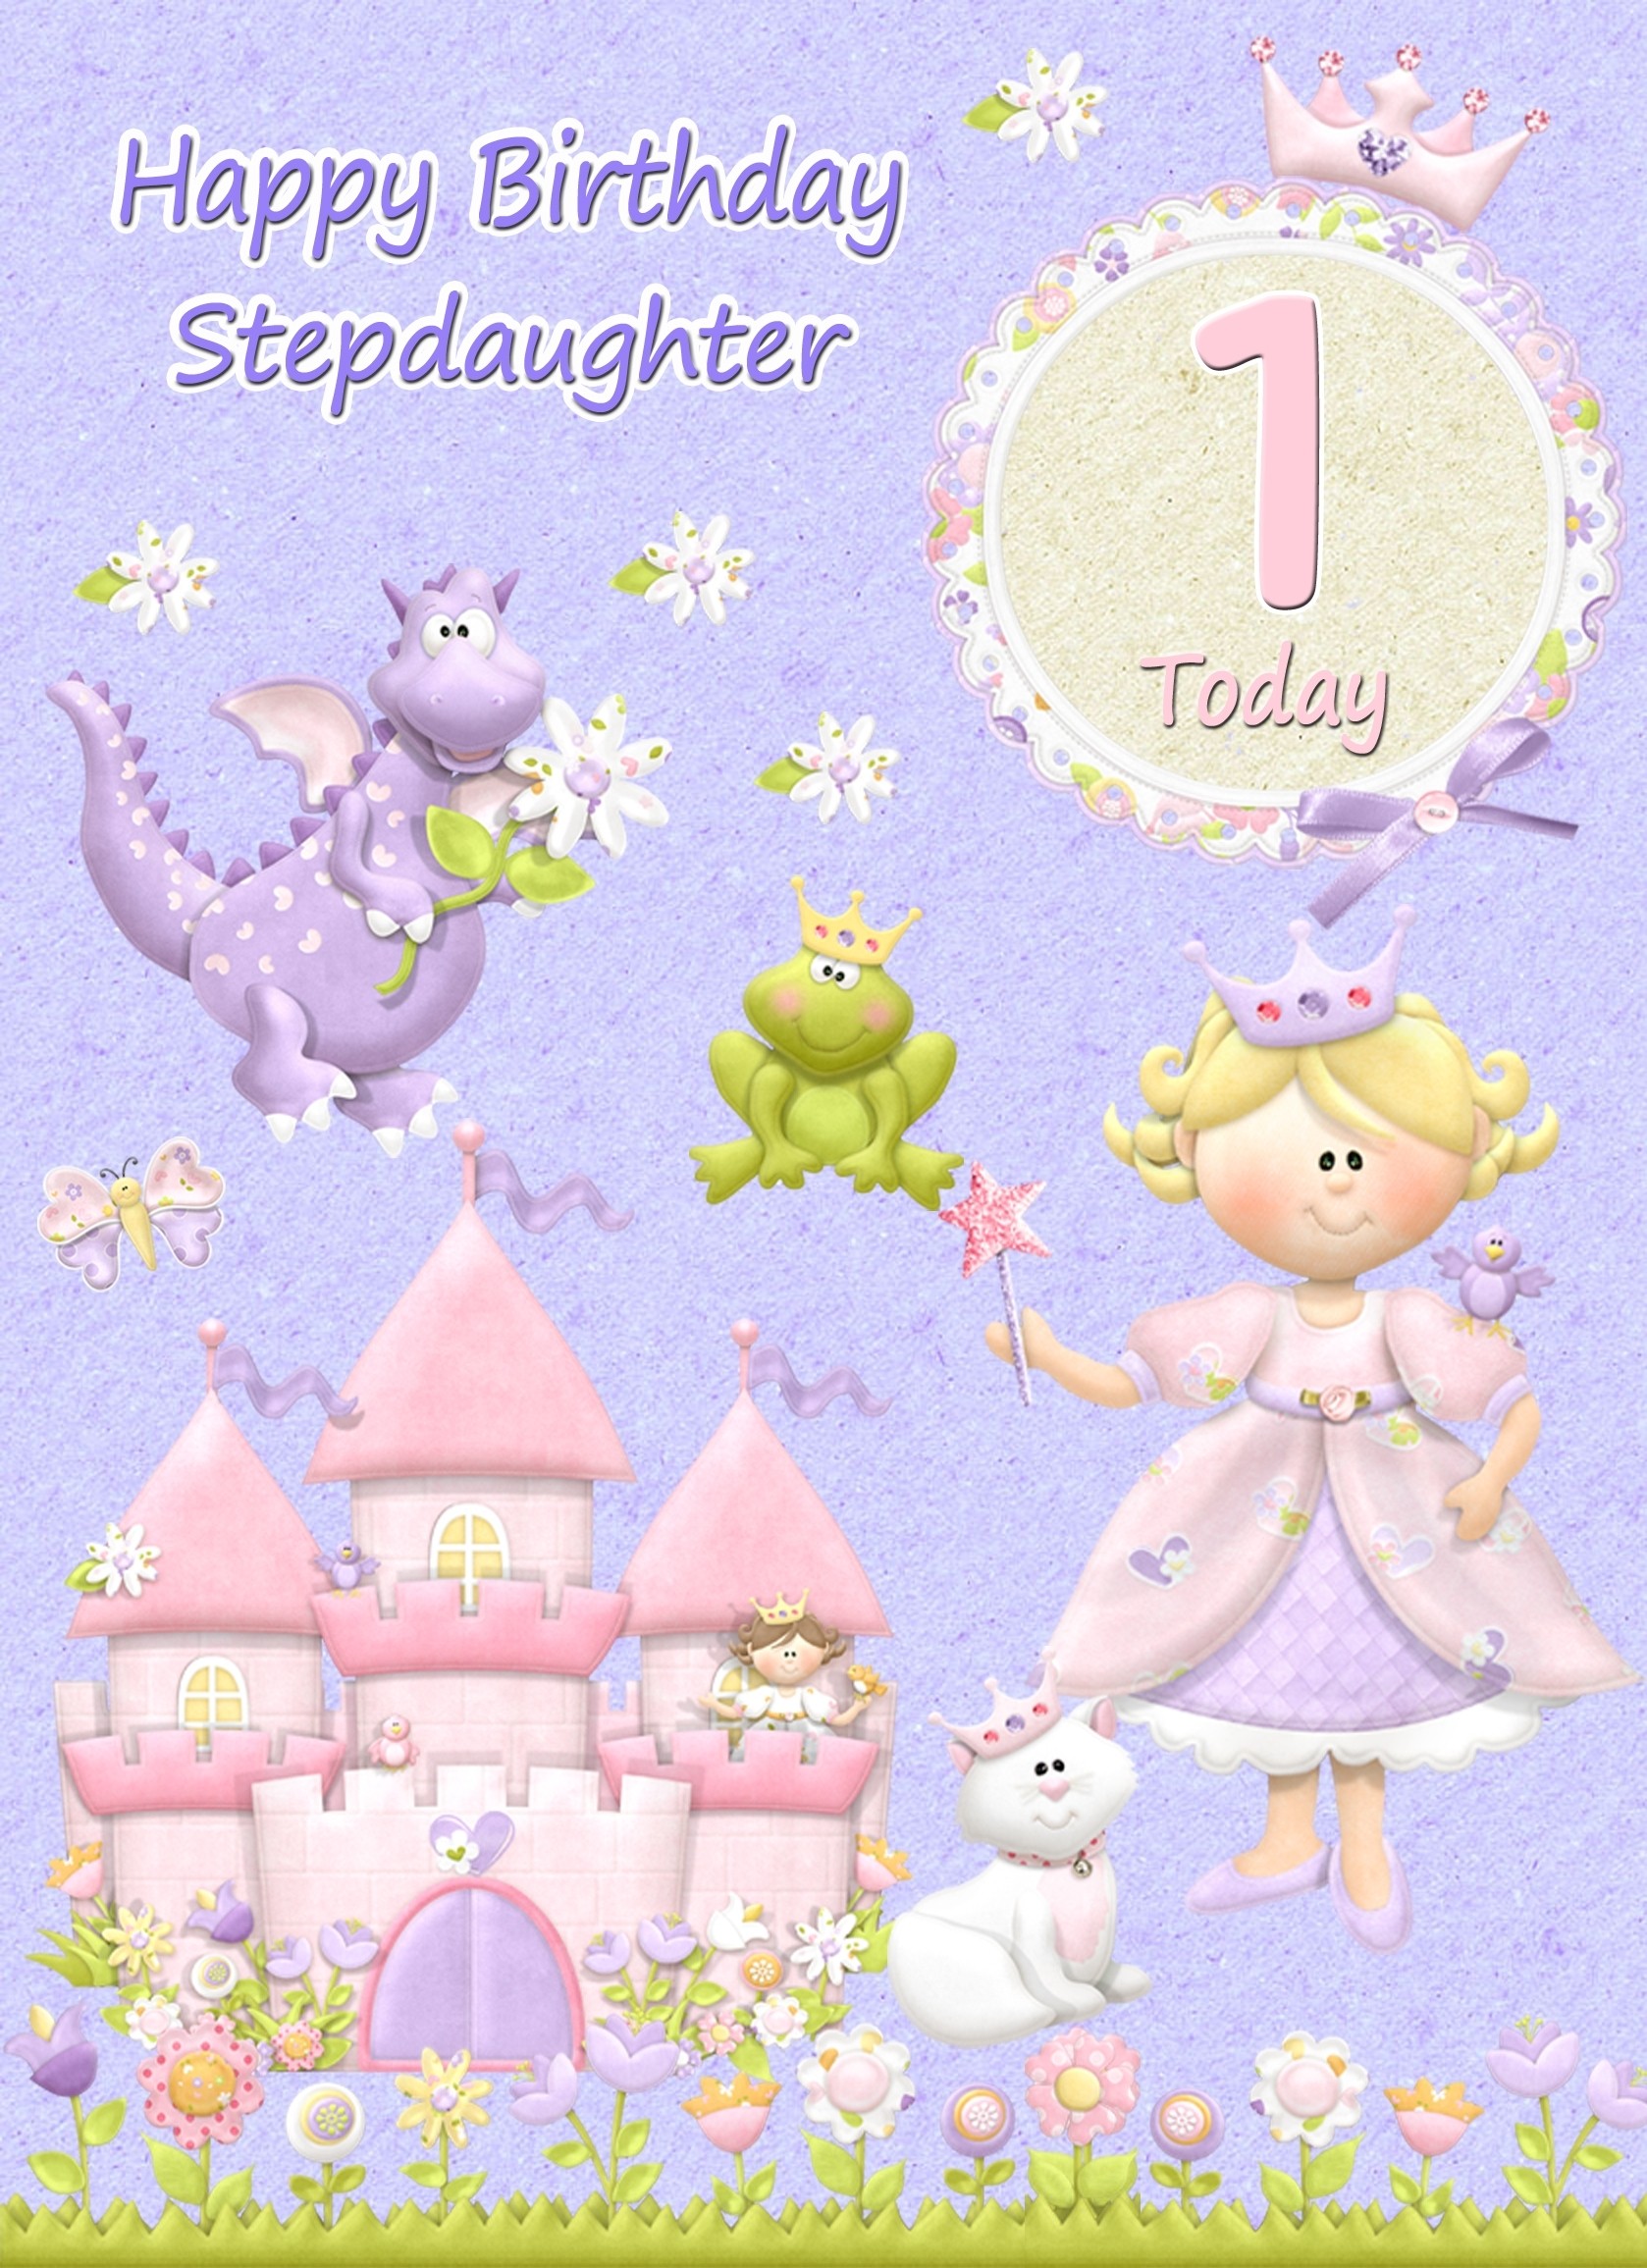 Kids 1st Birthday Princess Cartoon Card for Stepdaughter